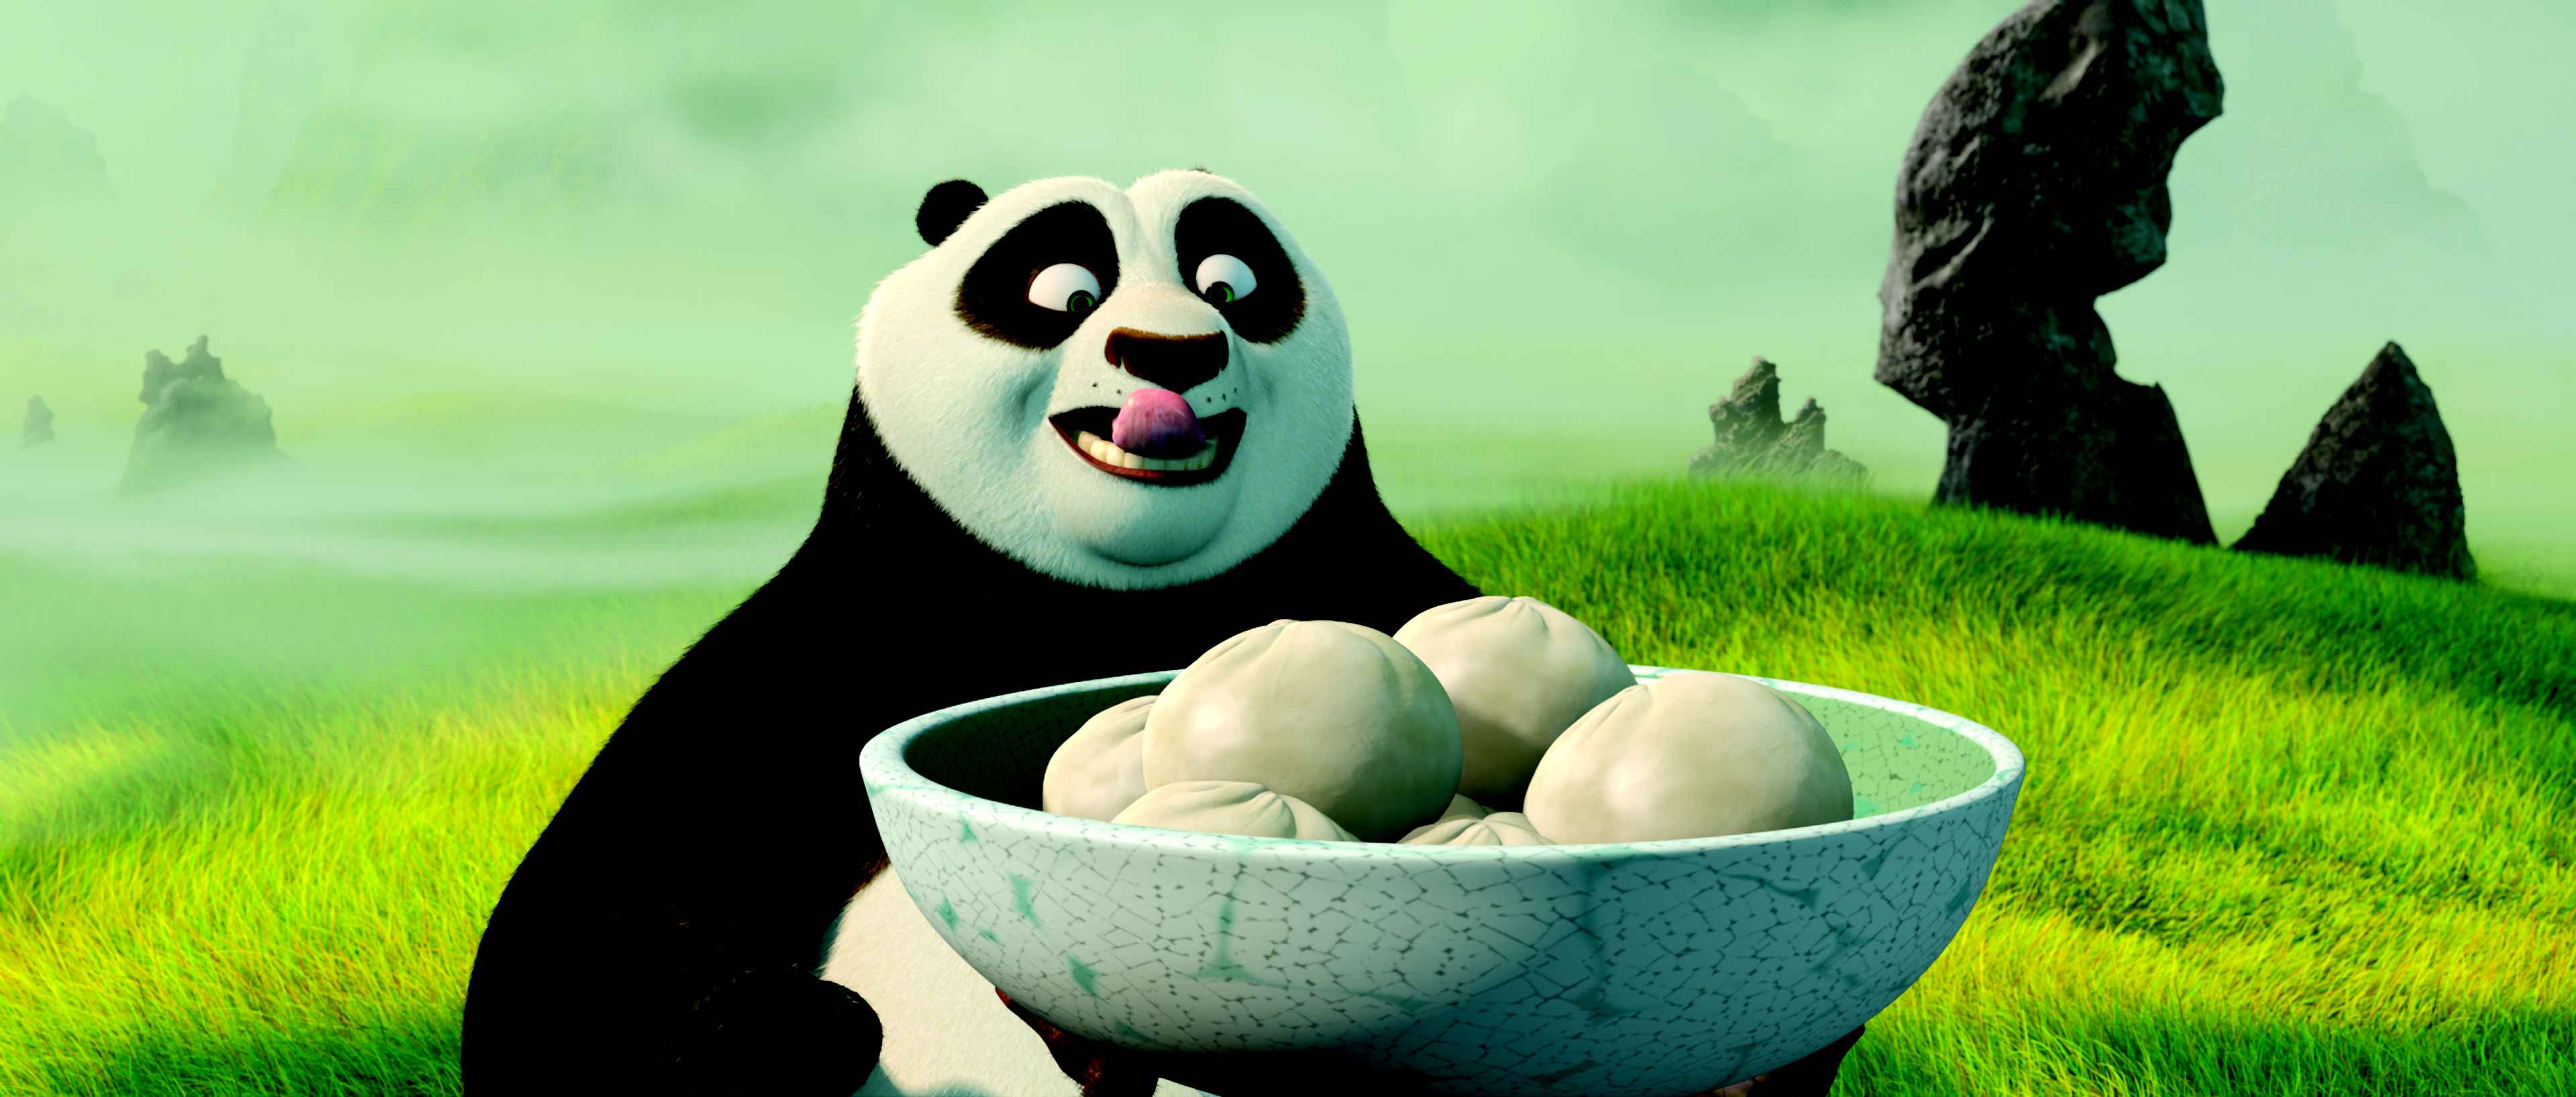 365064 télécharger l'image kung fu panda, film, kung fu panda 3, po (kung fu panda) - fonds d'écran et économiseurs d'écran gratuits